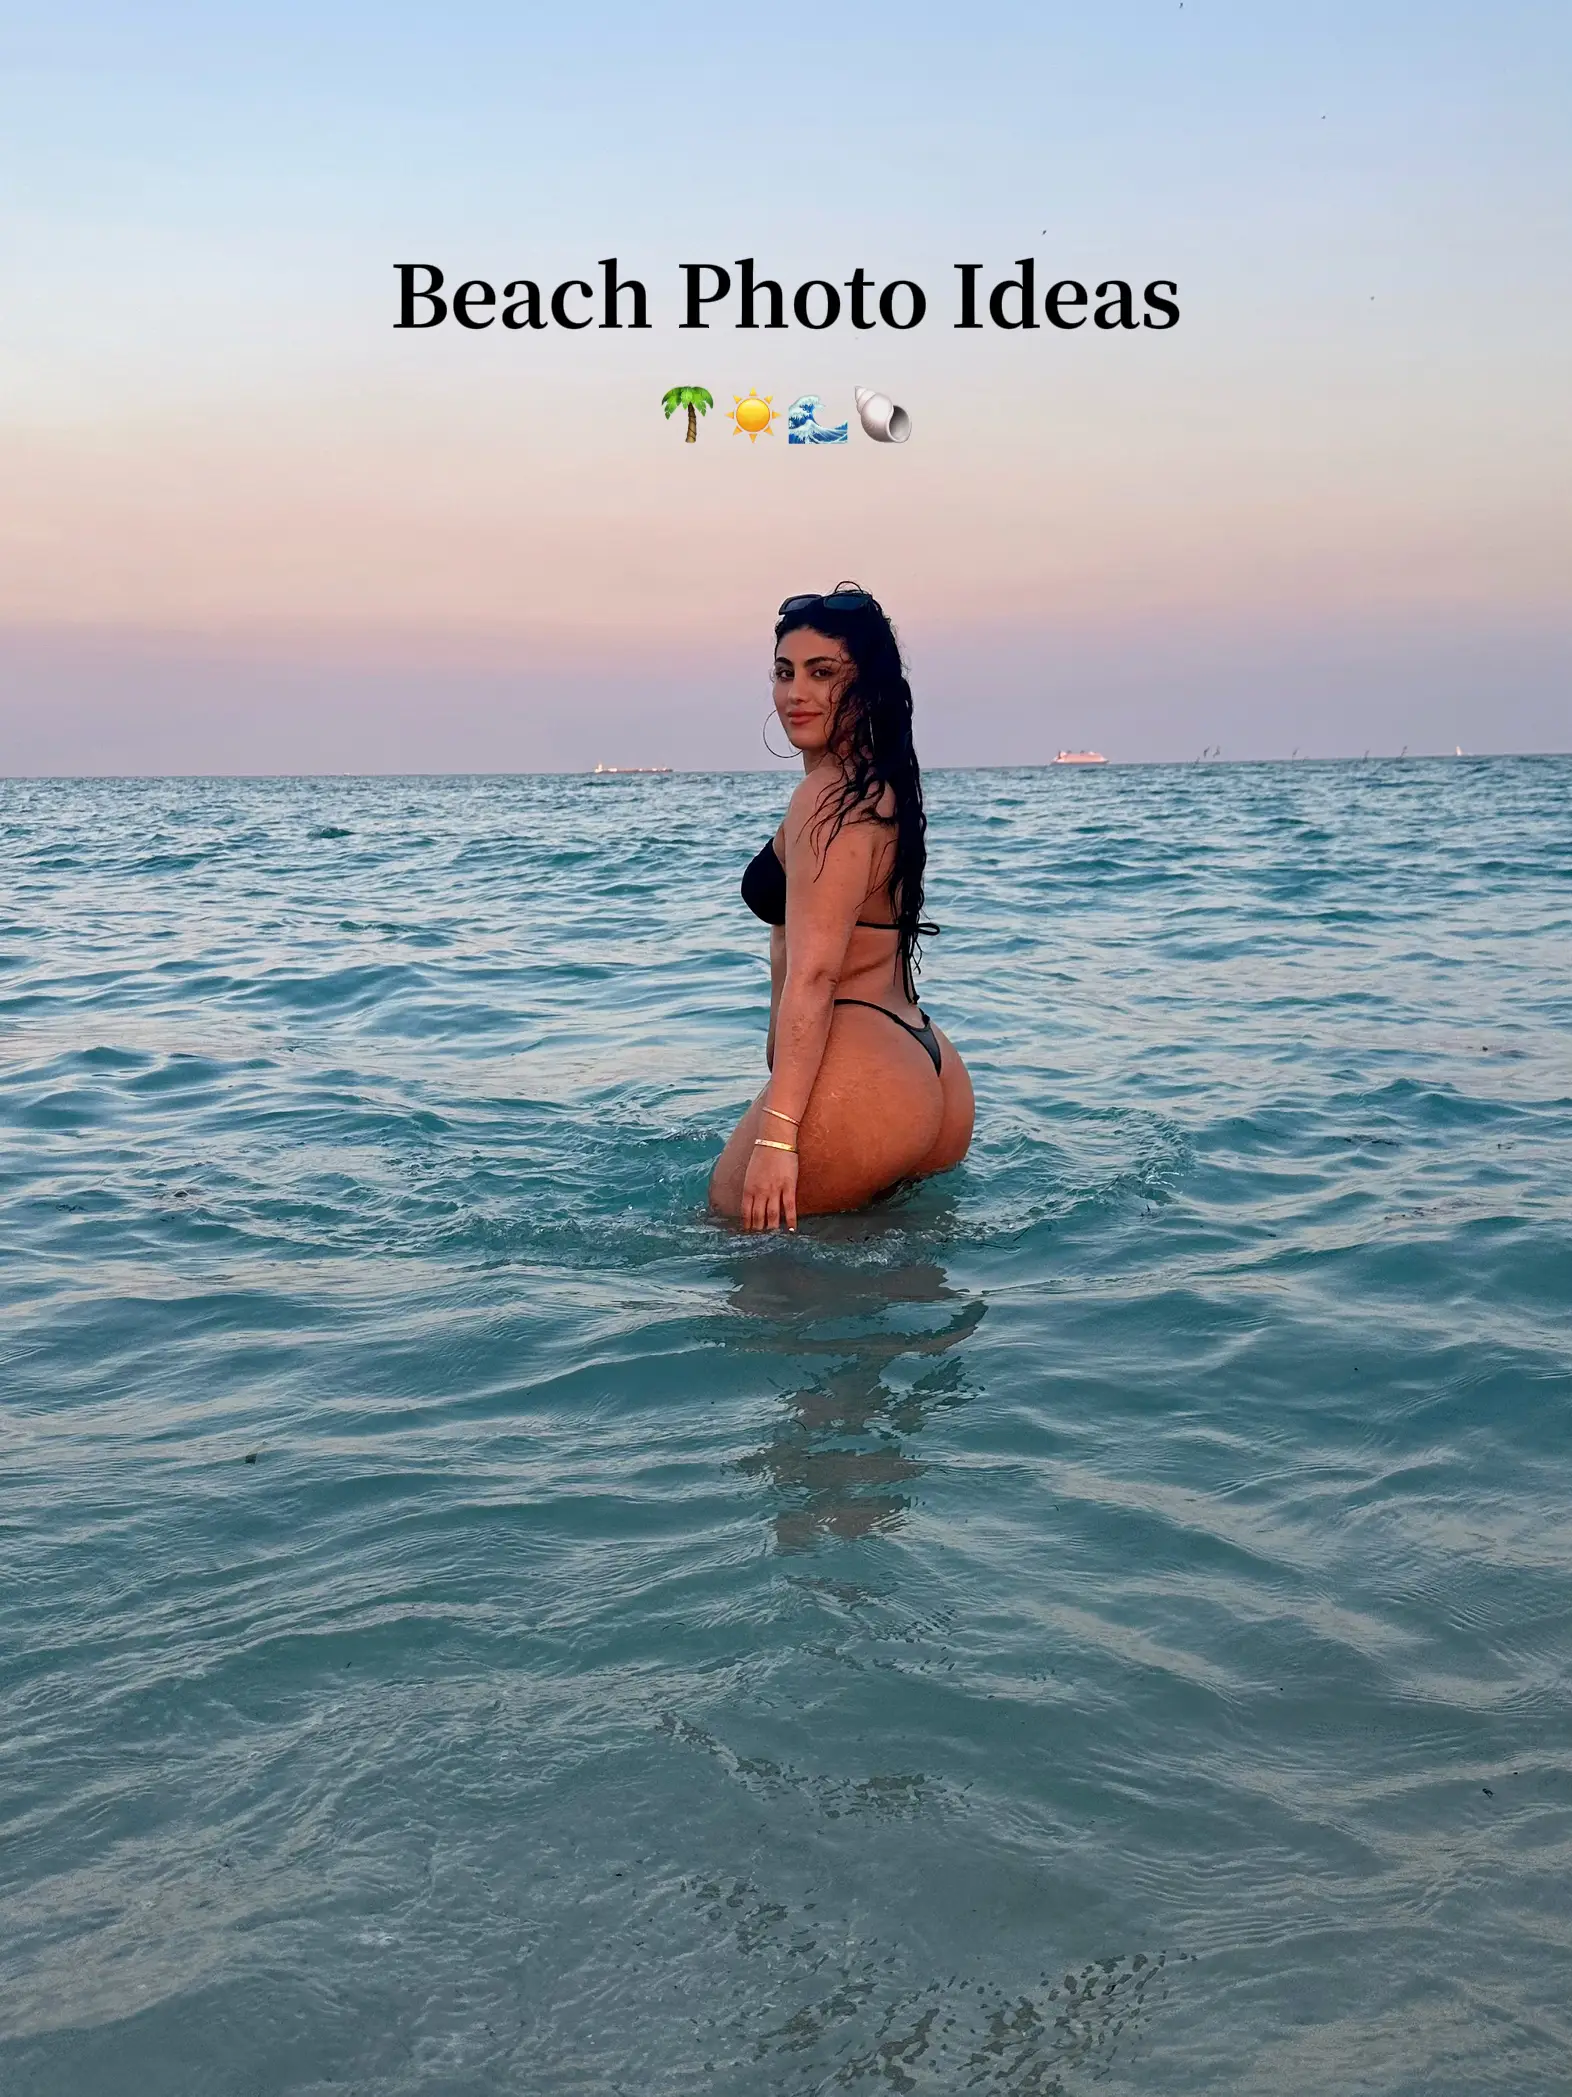  A woman in a bikini is standing in the water.